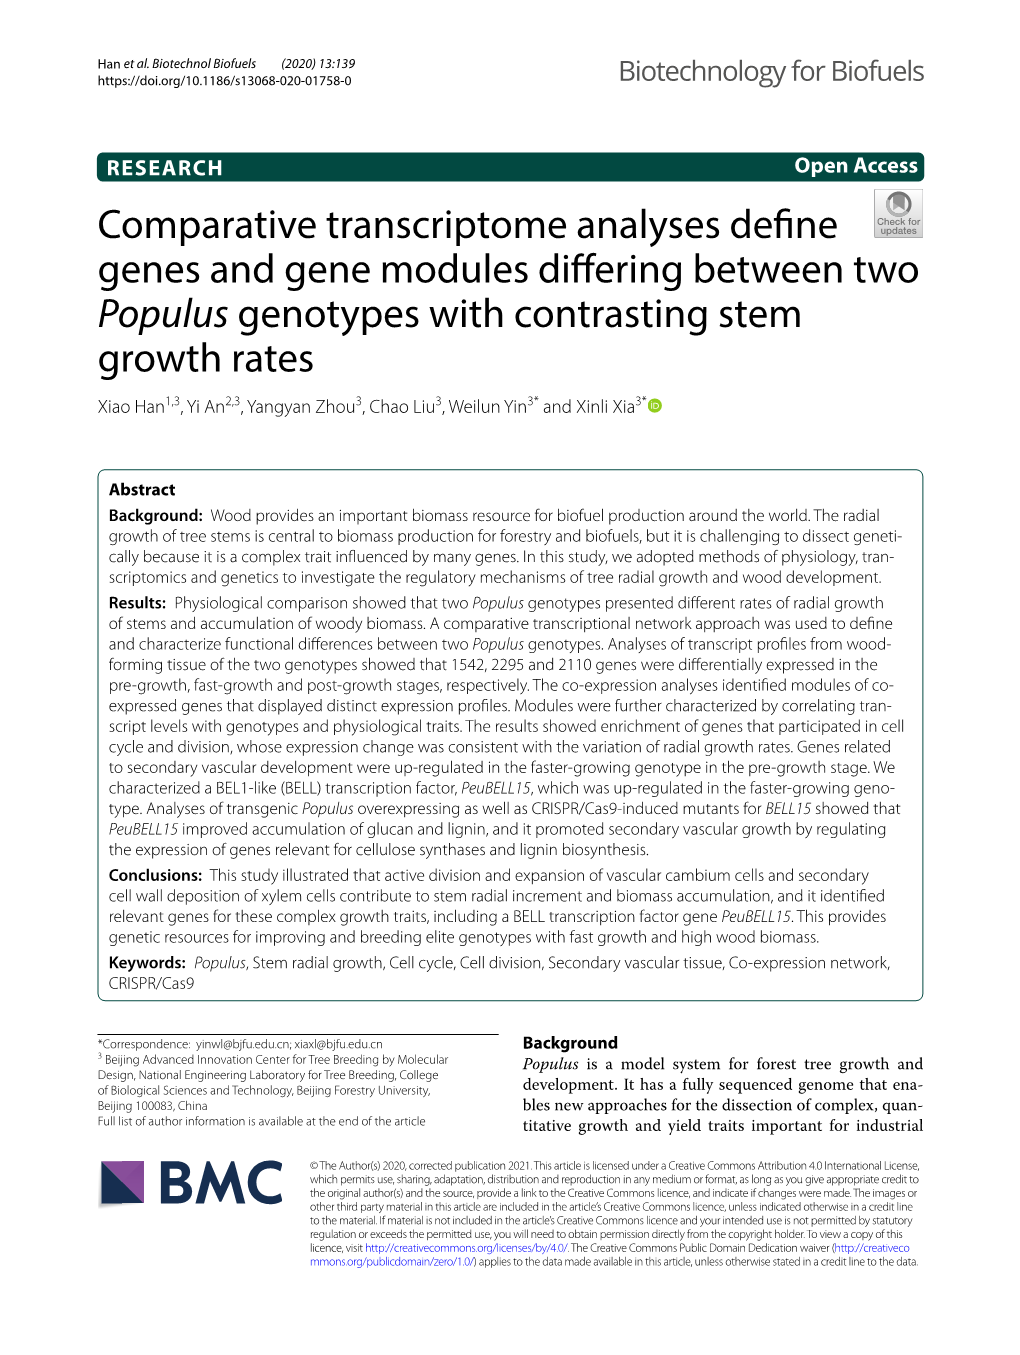 Comparative Transcriptome Analyses Define Genes and Gene Modules